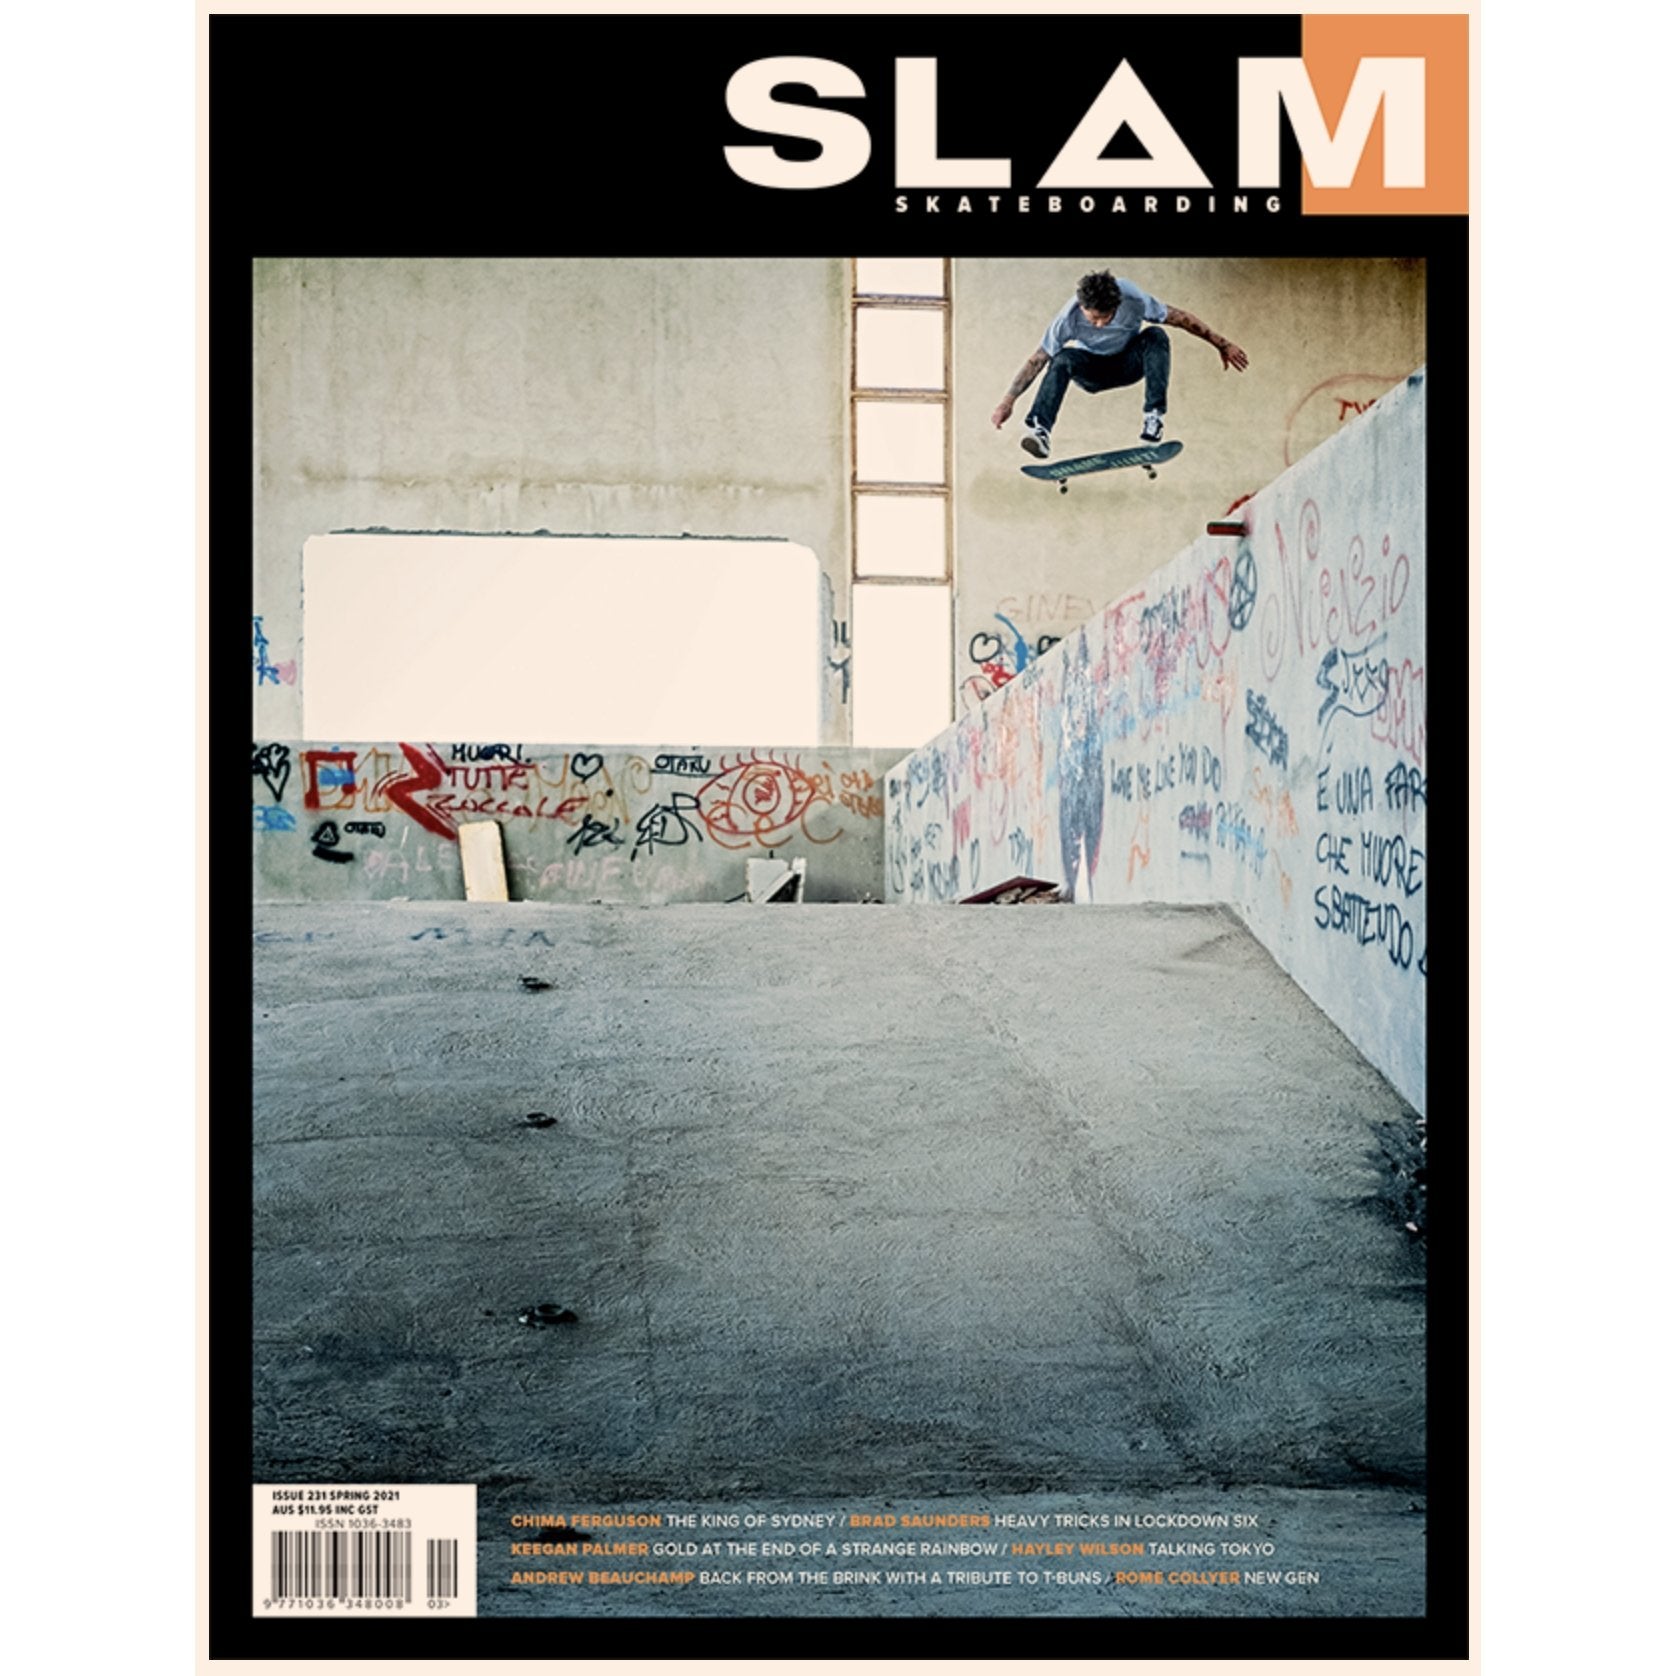 SLAM Magazine - Issue #231 - Parliamentskateshop